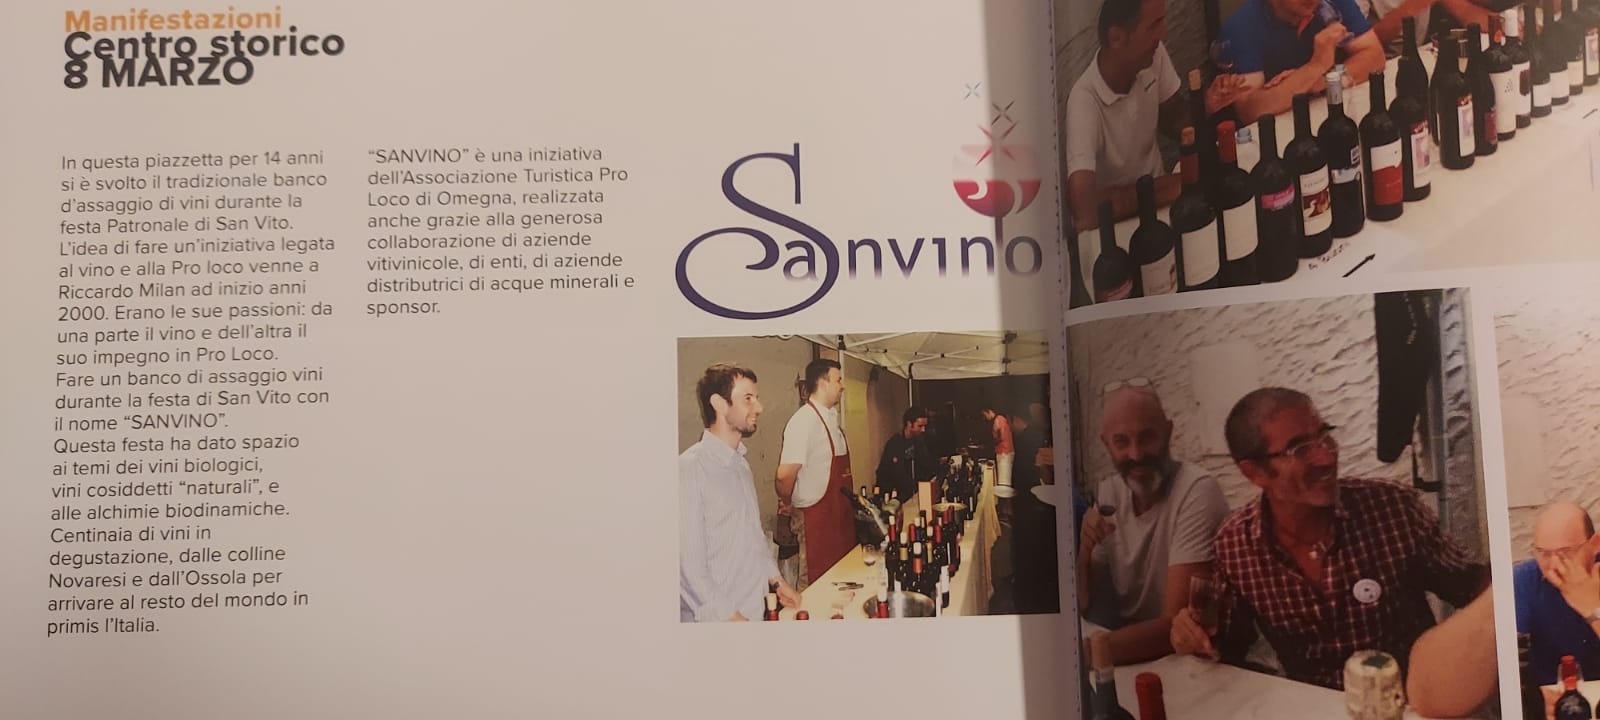 Remember Sanvino